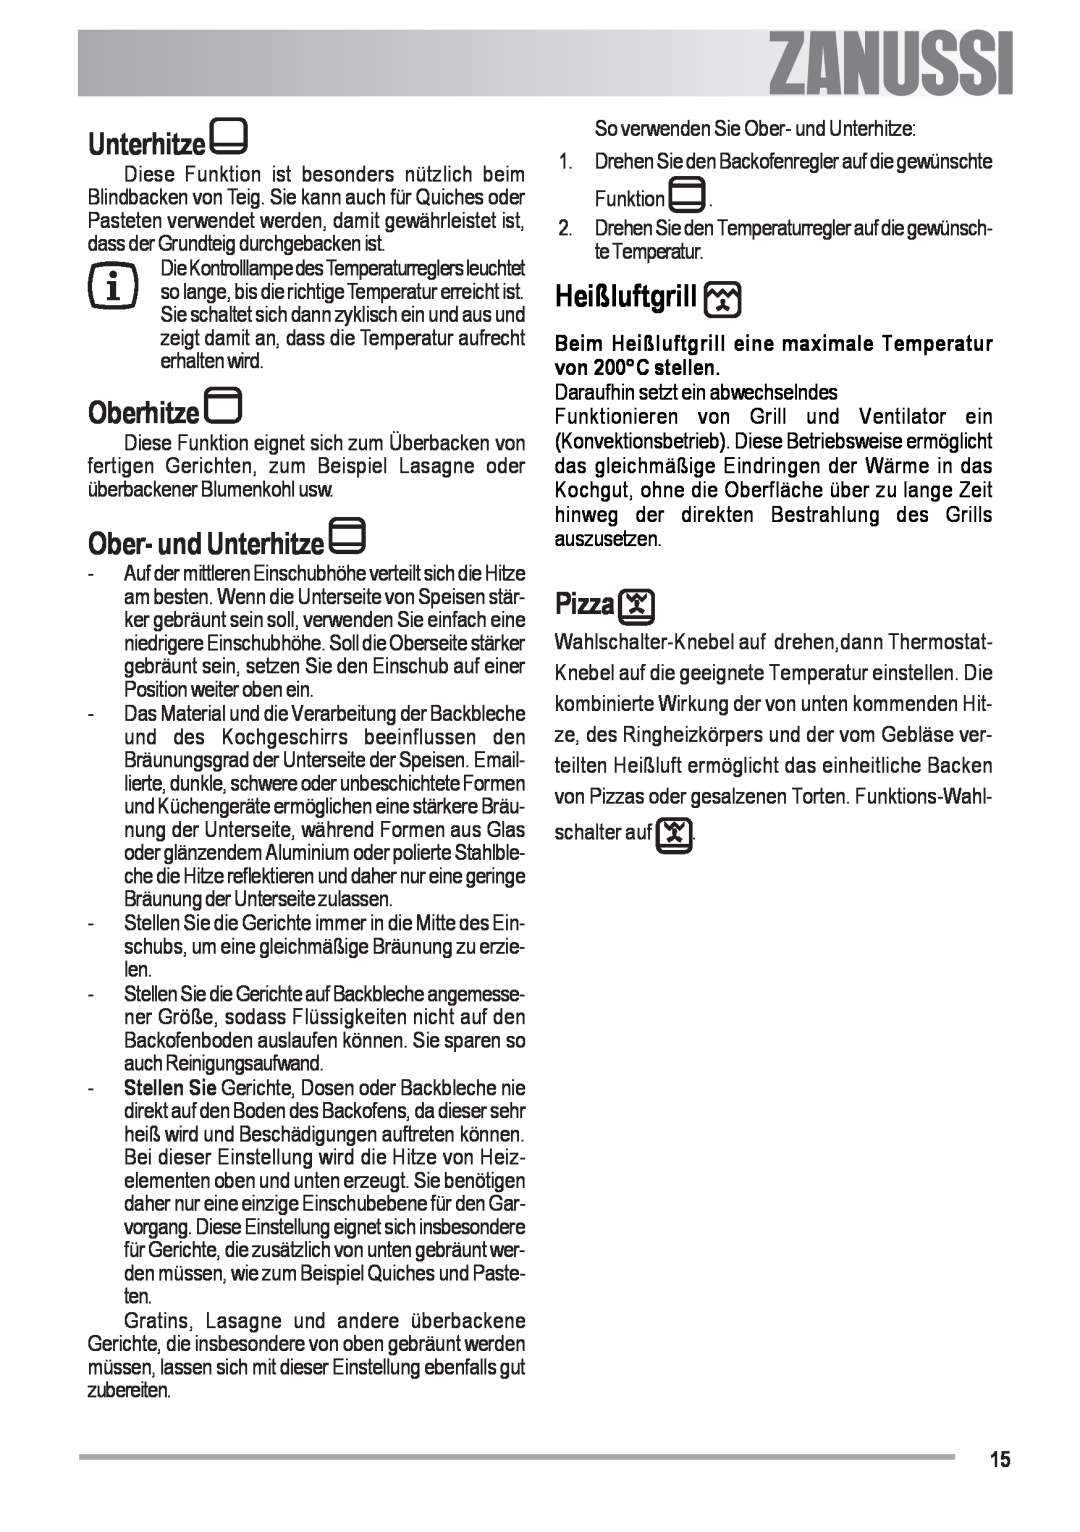 Zanussi ZOU 482 user manual Oberhitze, Ober- und Unterhitze, Heißluftgrill, Pizza, Funktion, schalter auf 